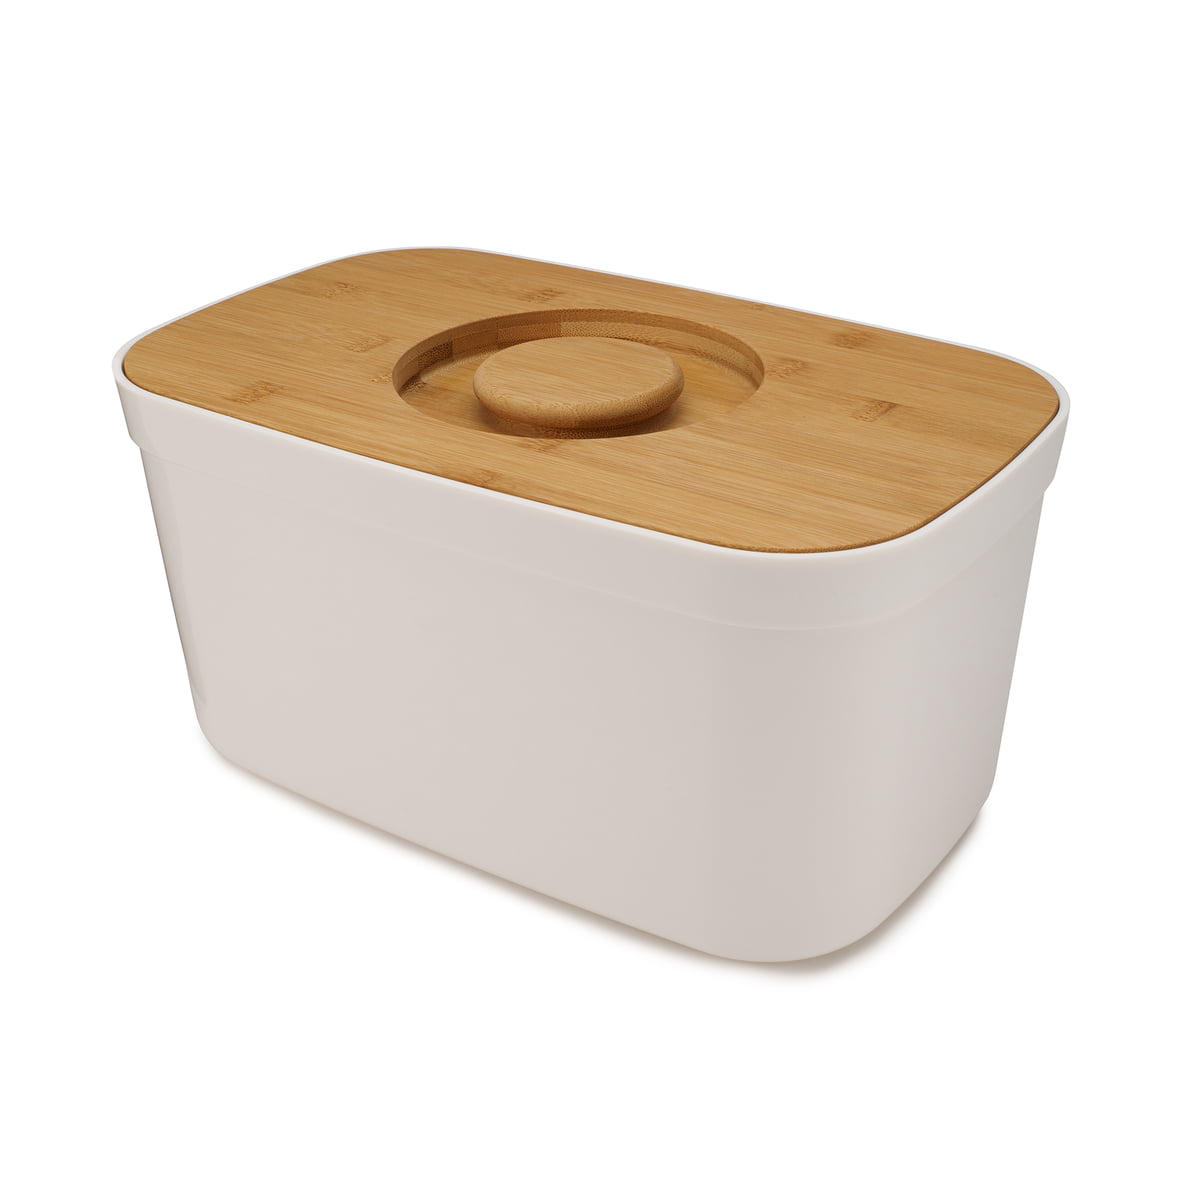 Joseph Joseph - Bread lid with bread Bin basket cutting board | Connox